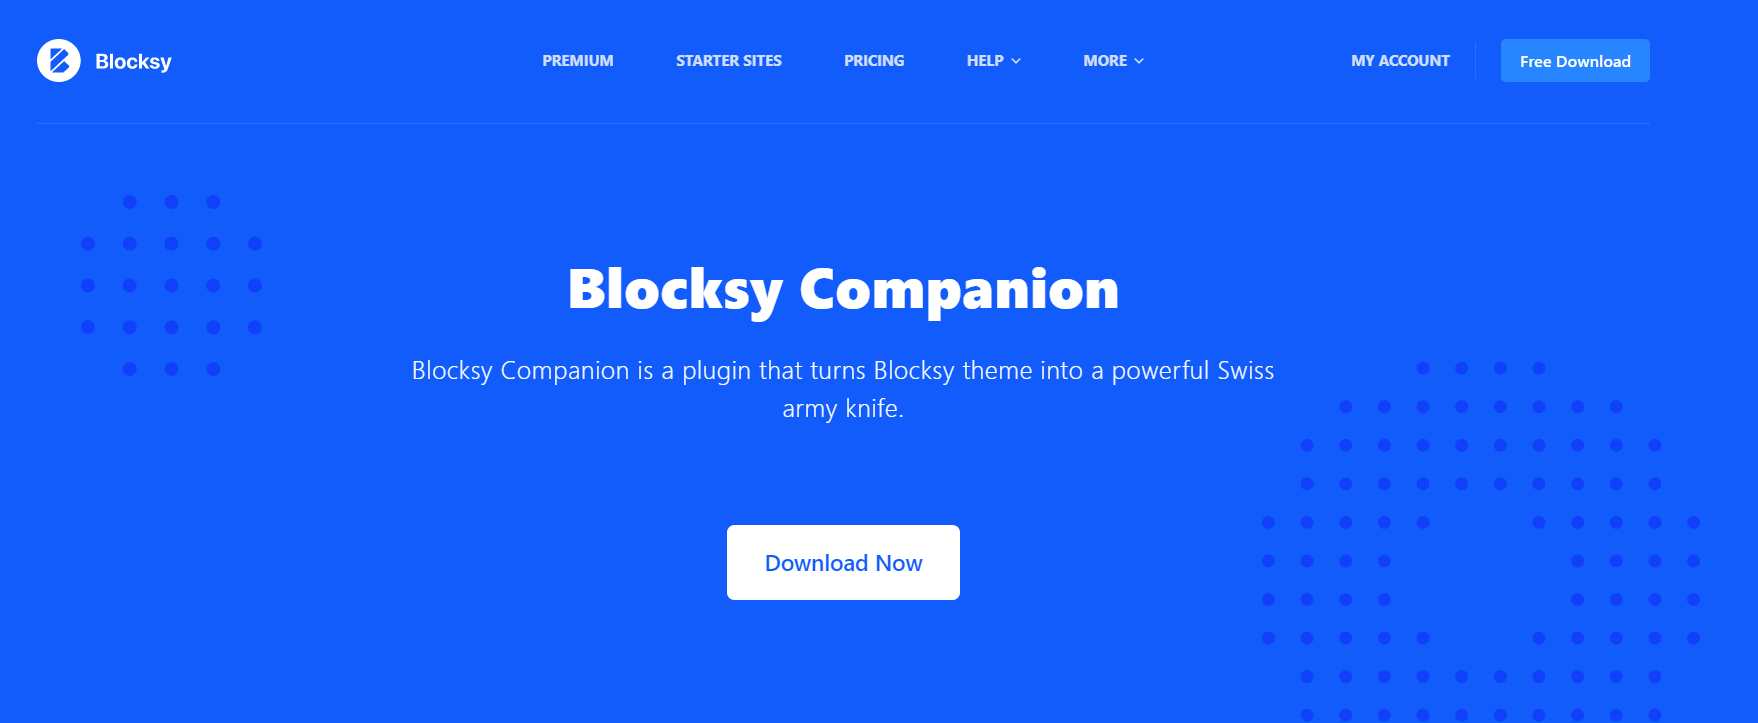 Blocksy Companion